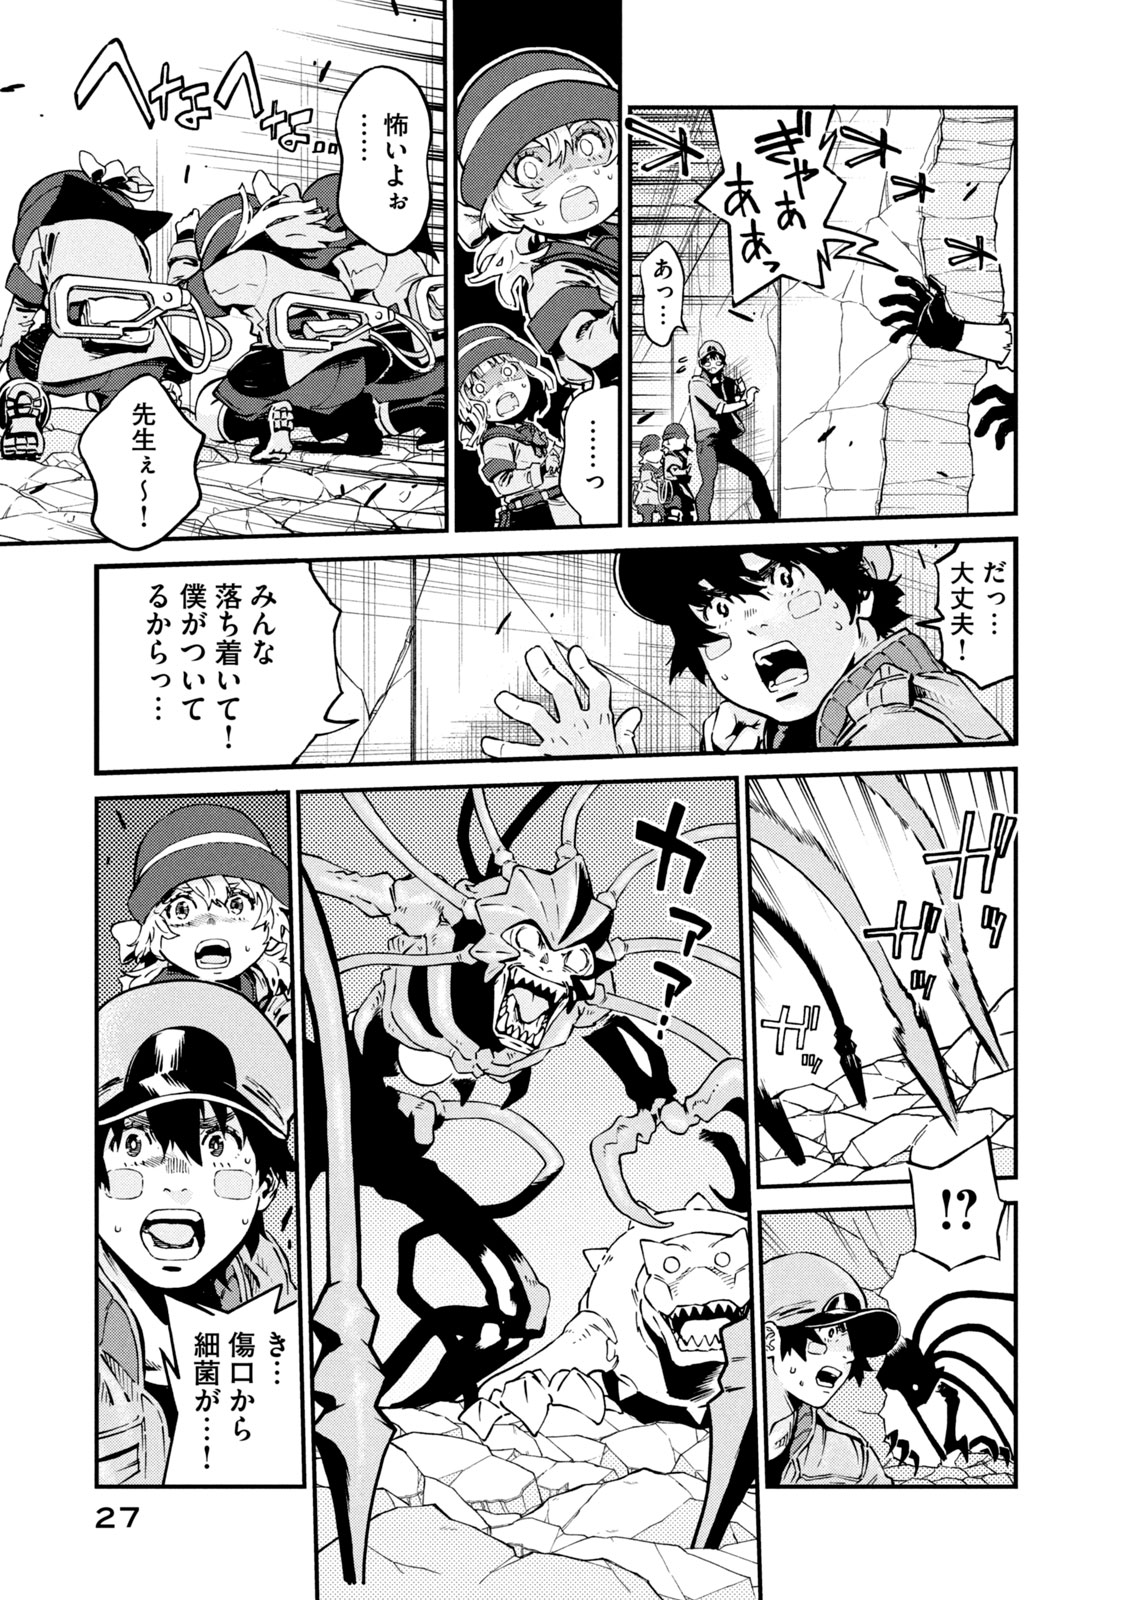 Hataraku Saibou BLACK - Chapter 43 - Page 3